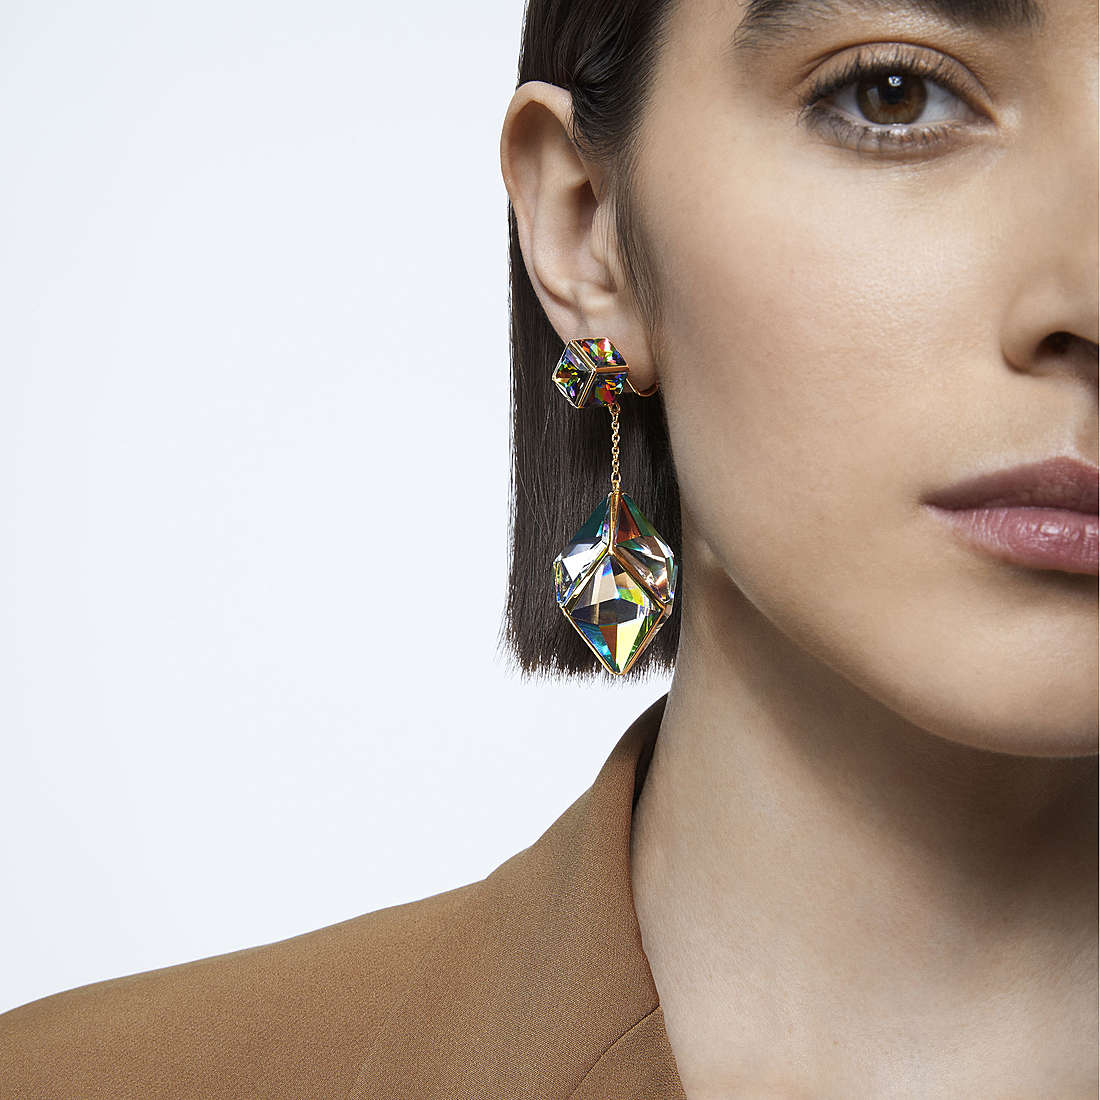 Swarovski earrings Curiosa woman 5627156 wearing